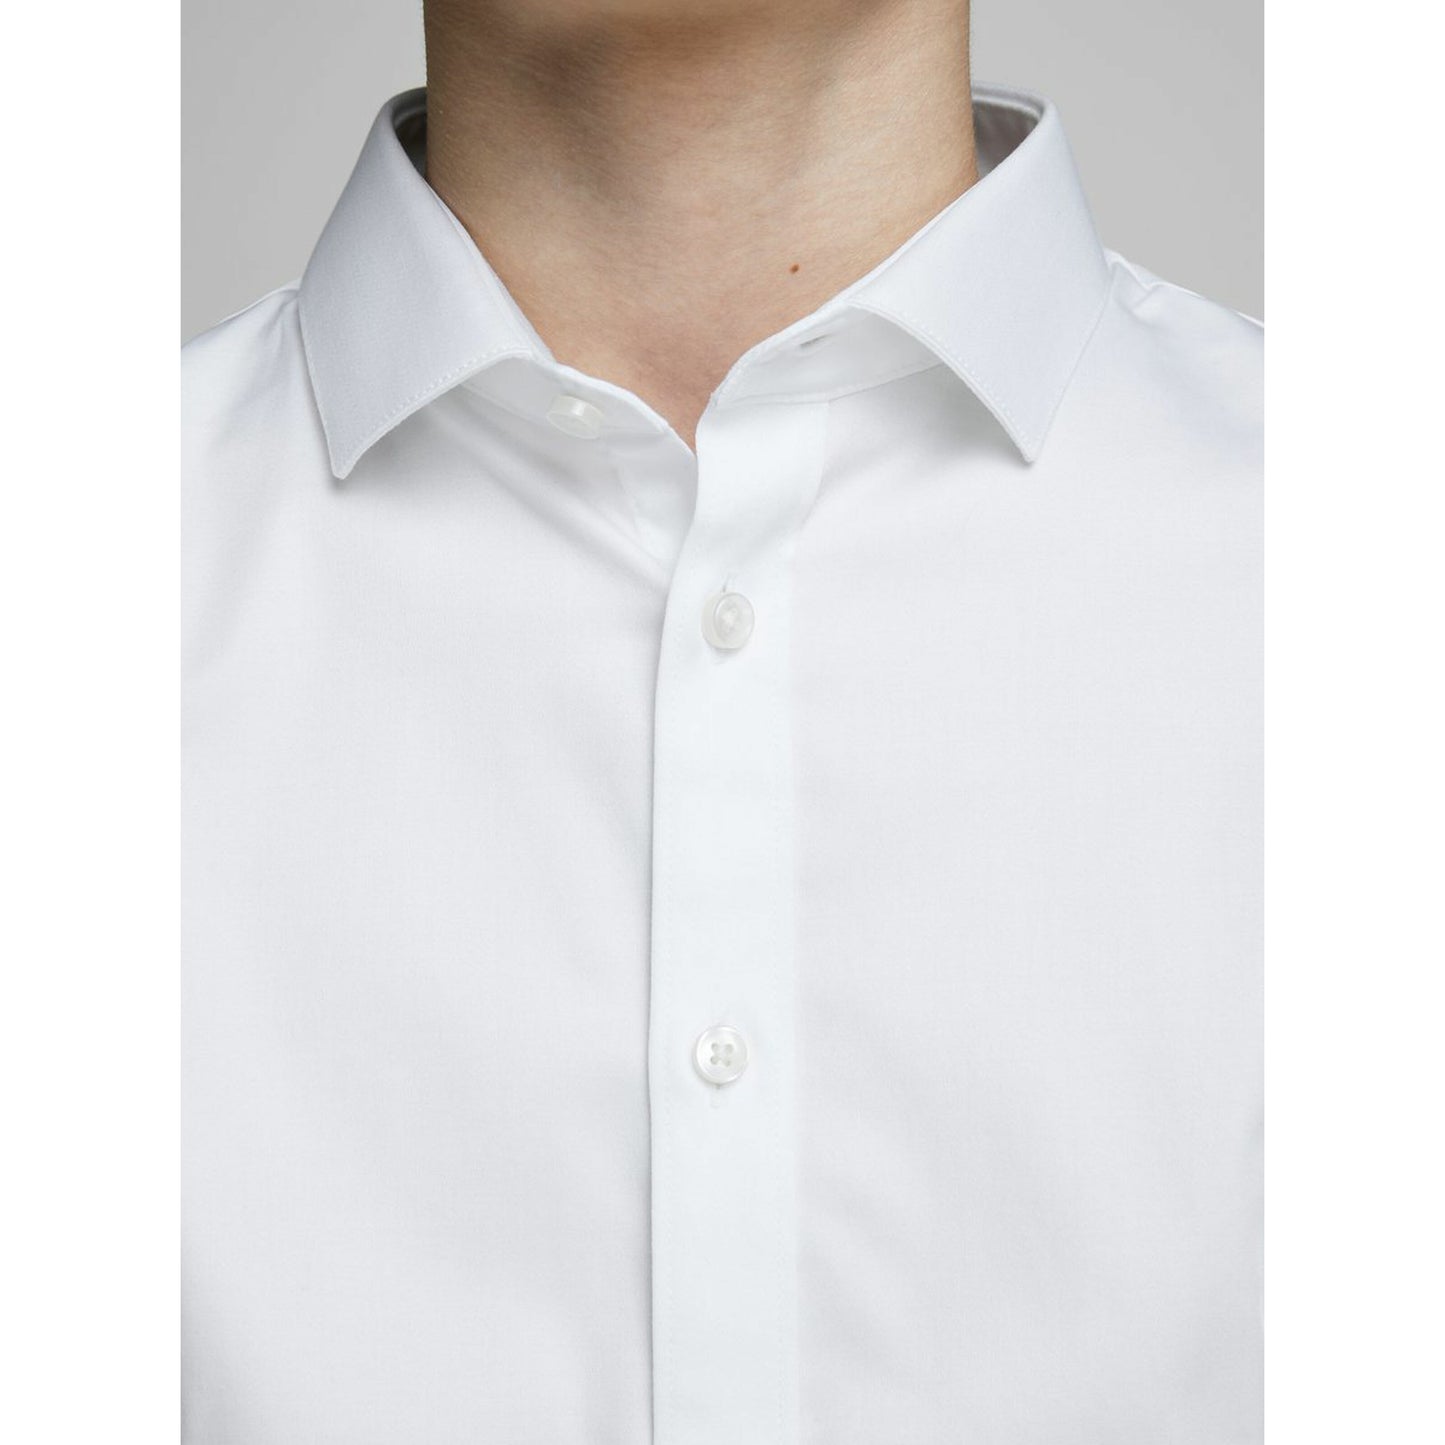 Jack & Jones Boy's White Long Sleeve Shirt